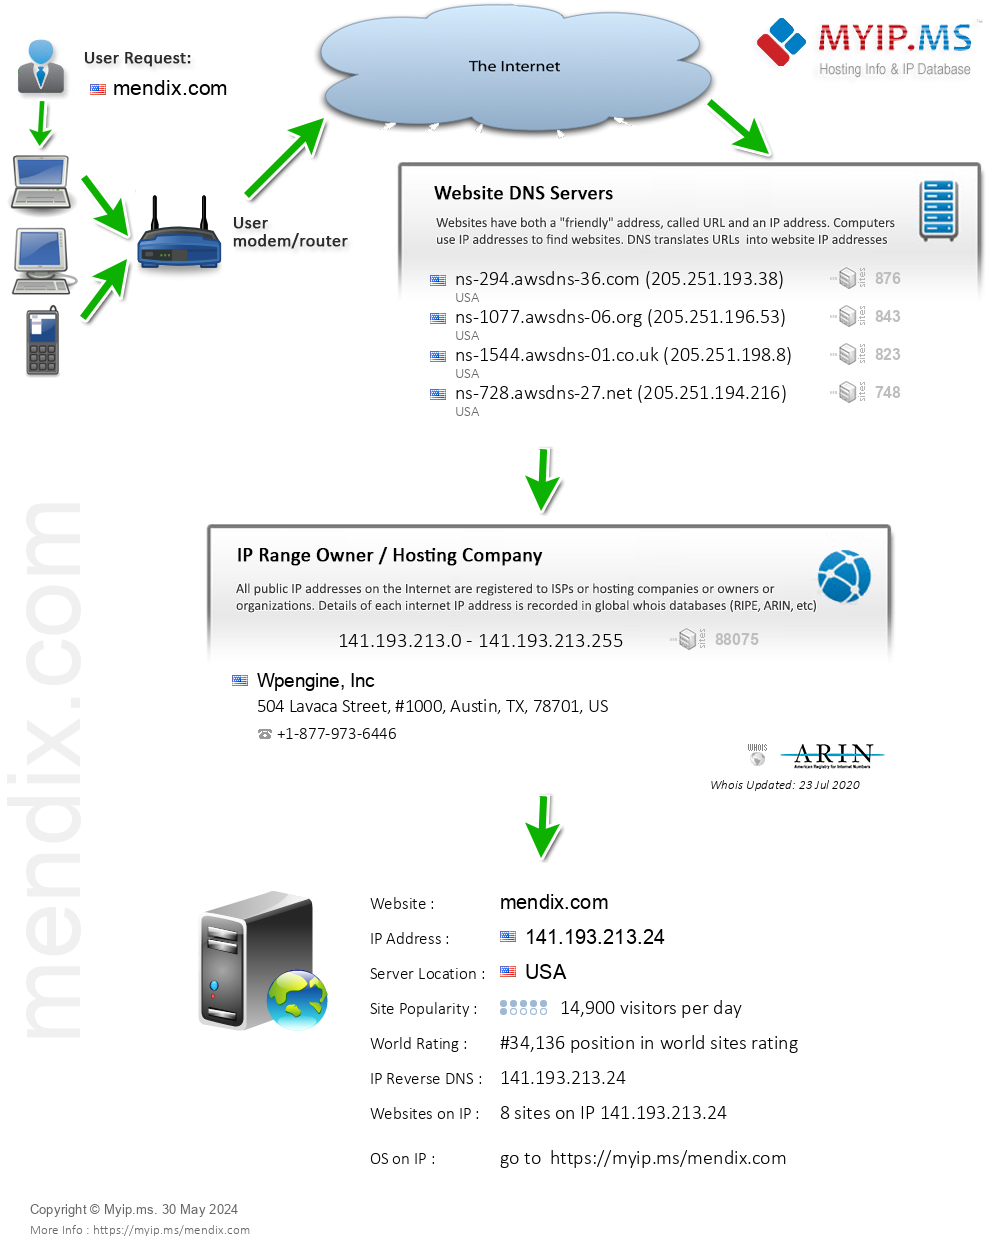 Mendix.com - Website Hosting Visual IP Diagram